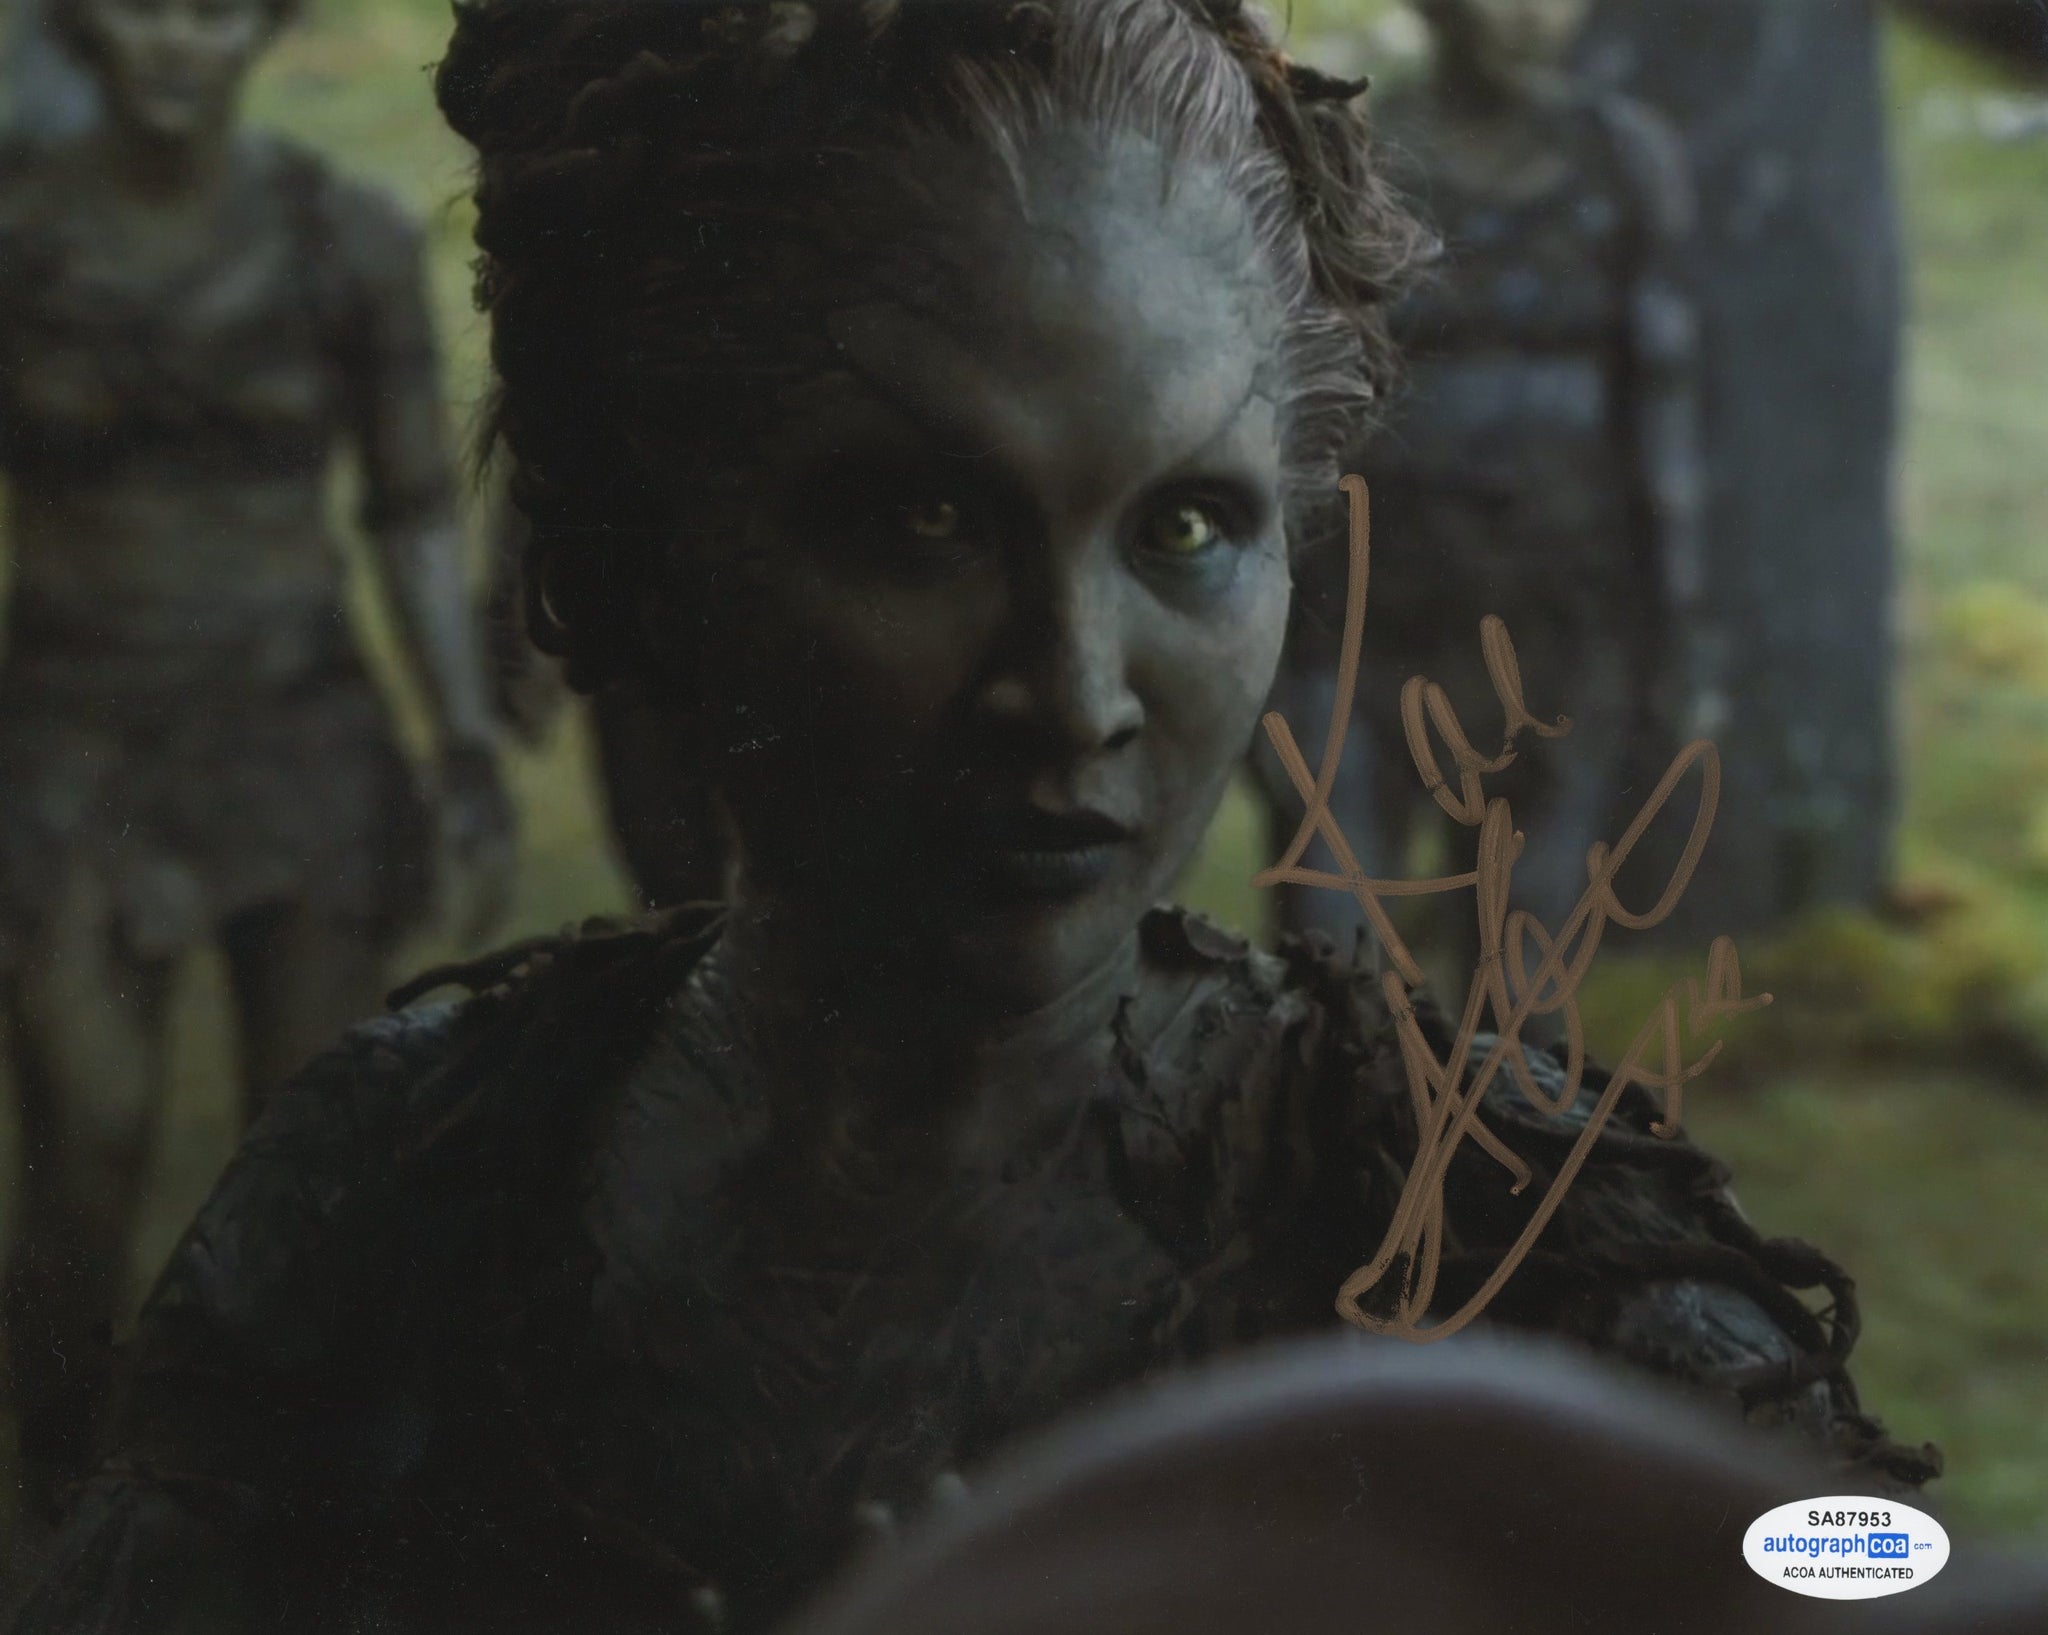 Kae Alexander Game of Thrones Signed Autograph 8x10 Photo ACOA